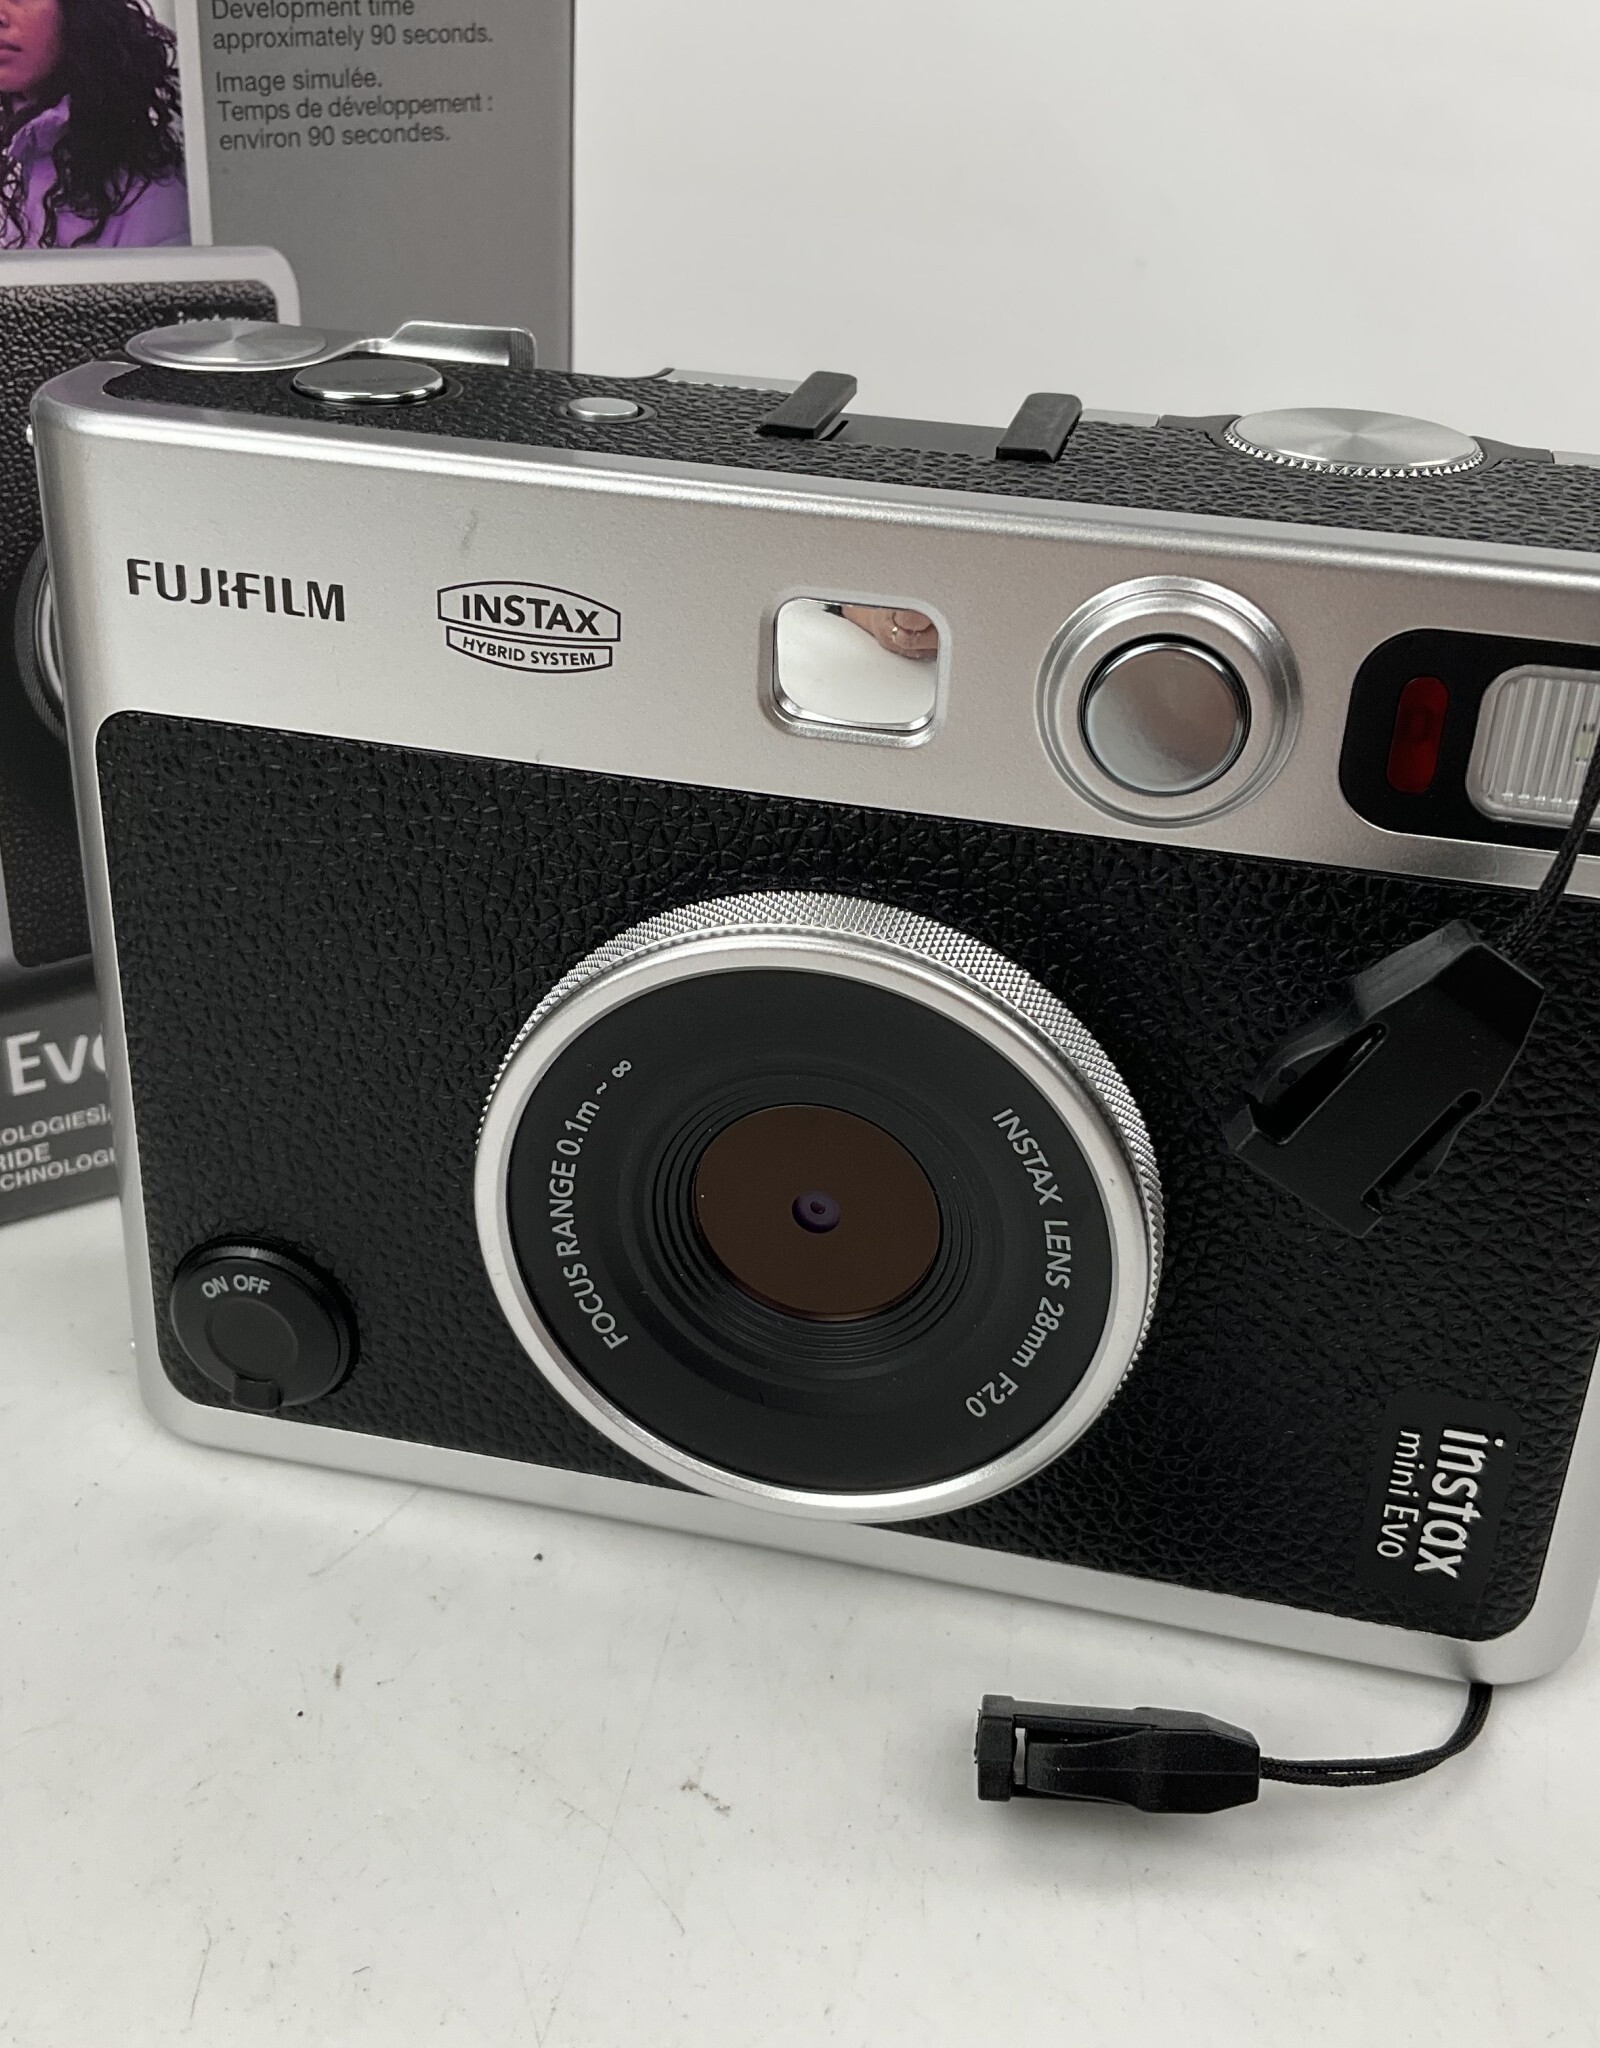 FUJI Fuji Instax Mini Evo Camera in Box Used EX